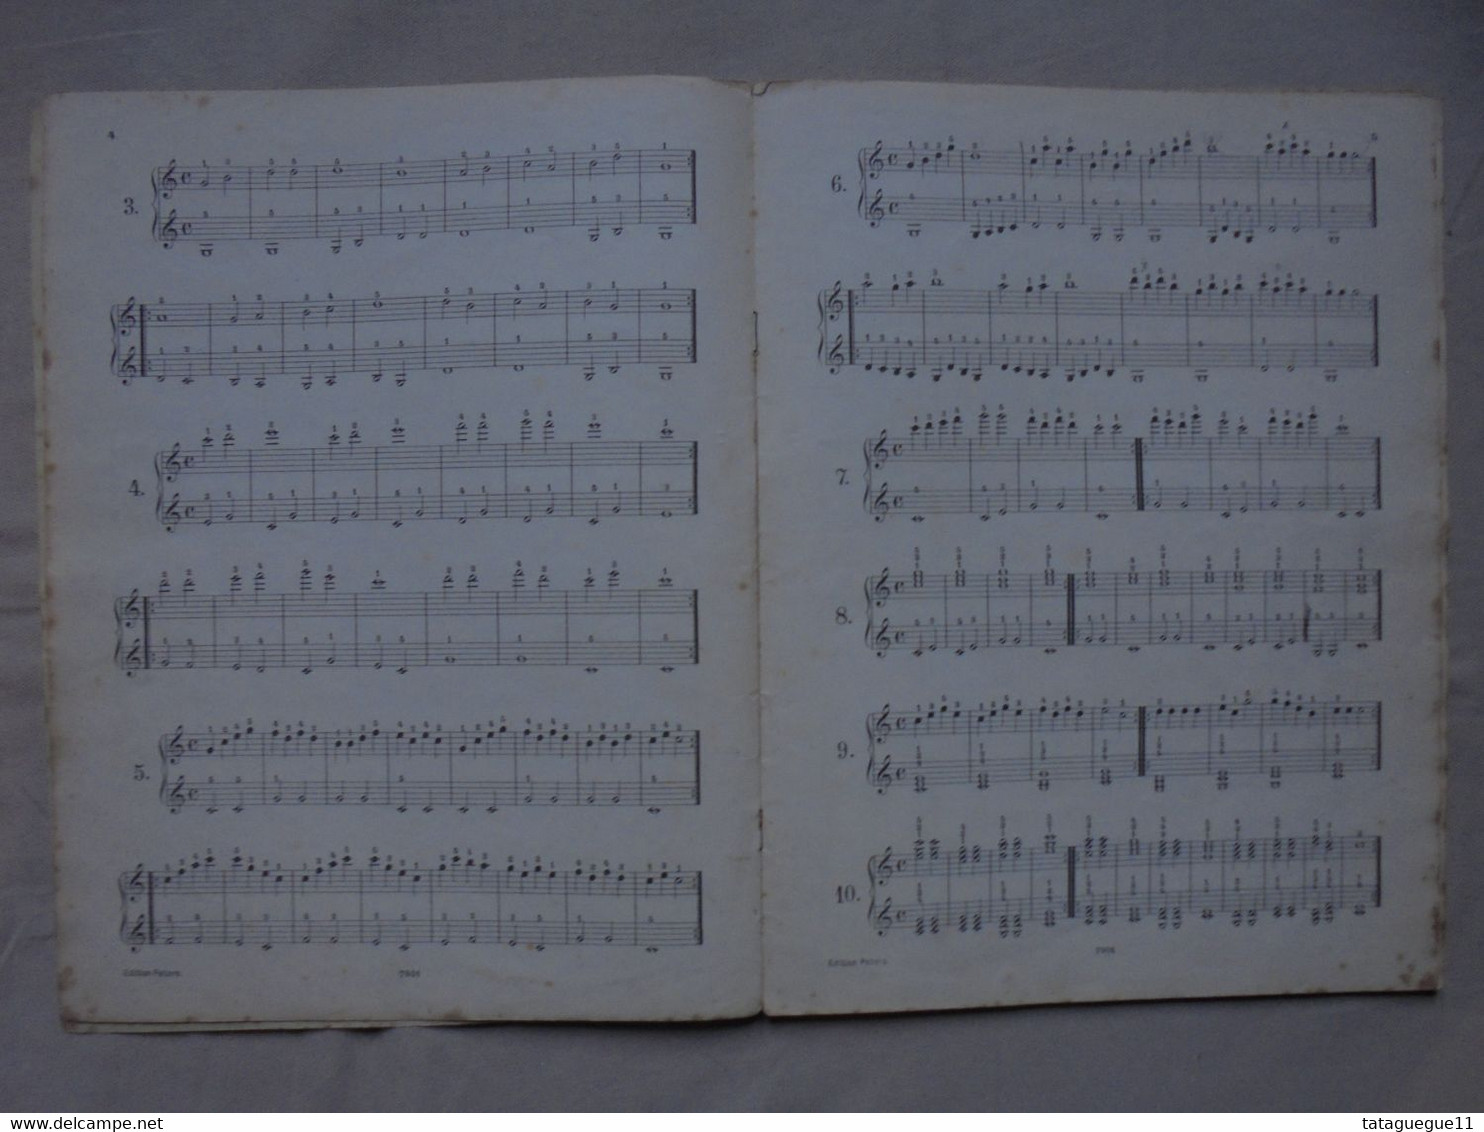 Ancien - CZERNY Erster Lehrmeister Op. 599 Pour Piano Ed. Peters N° 2402 - Instruments à Clavier